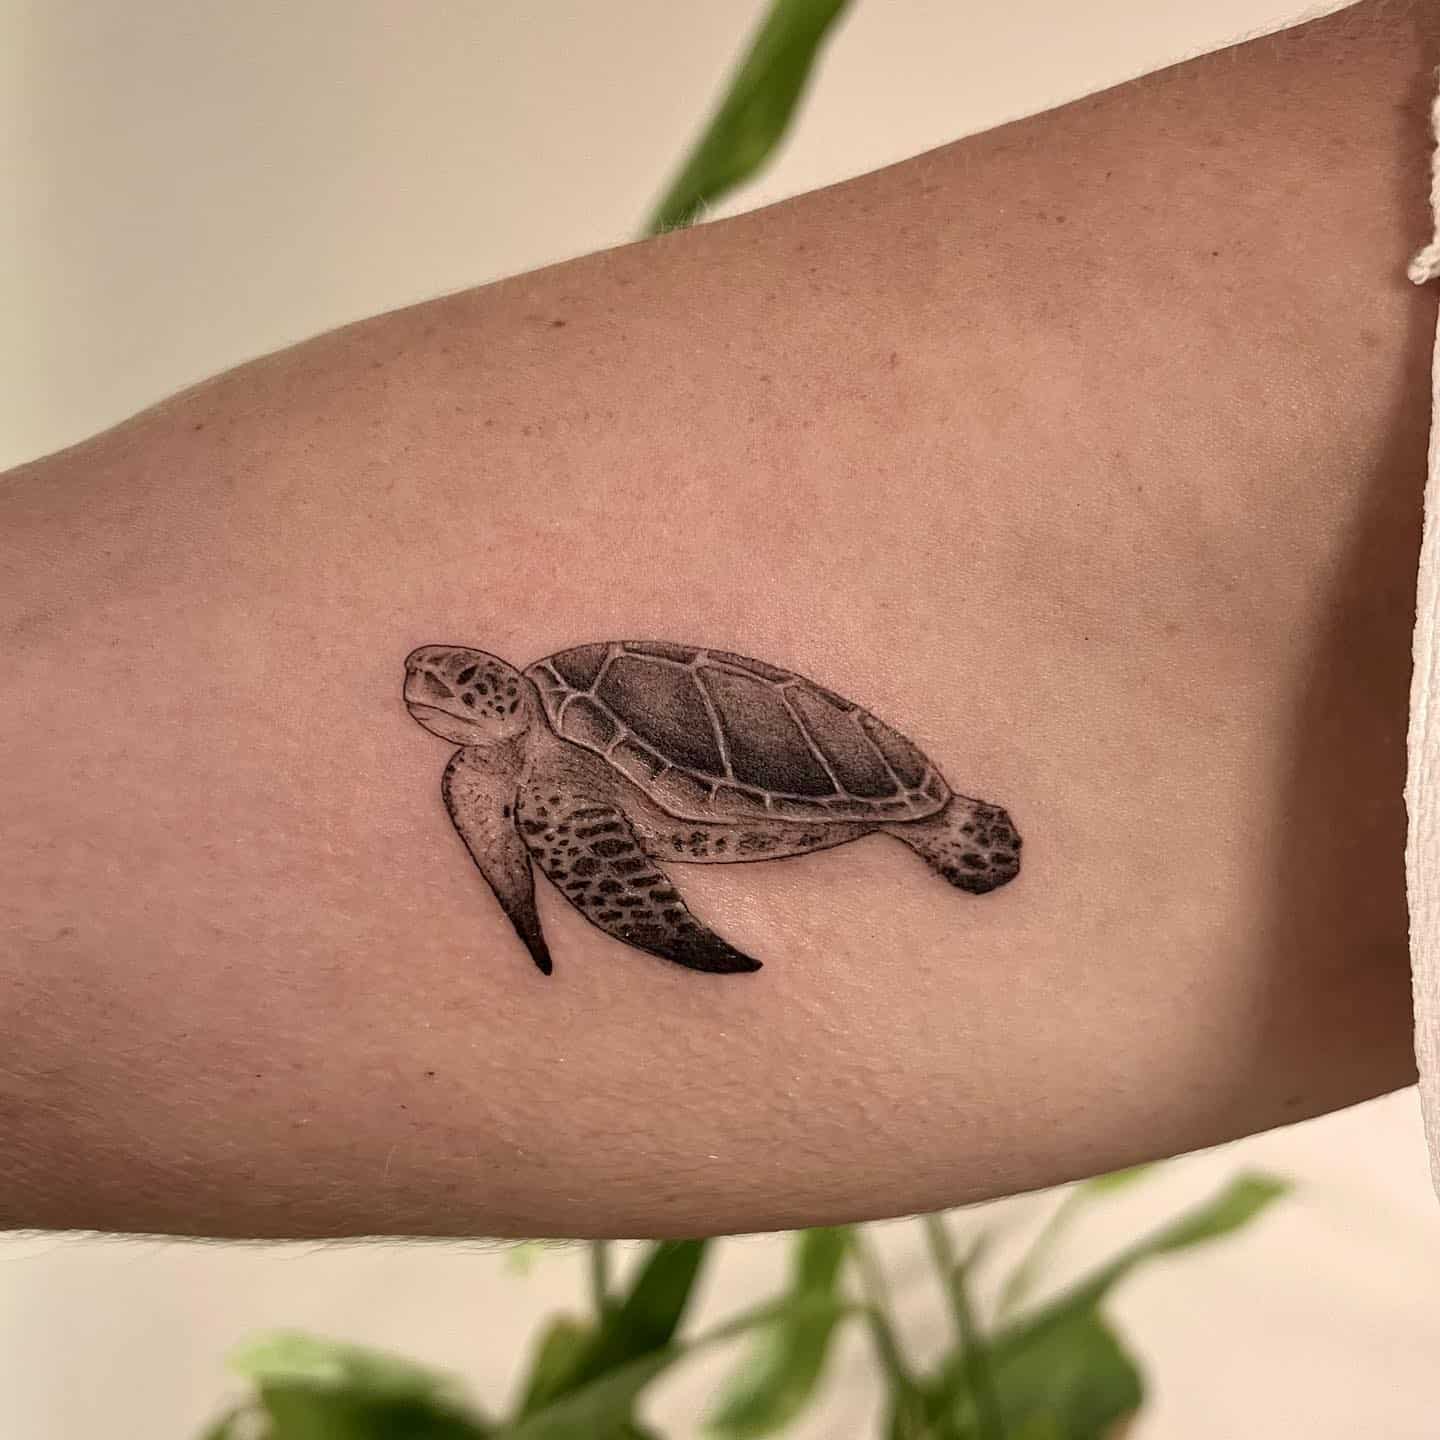 Tortoise tattoo by anaceltattoo